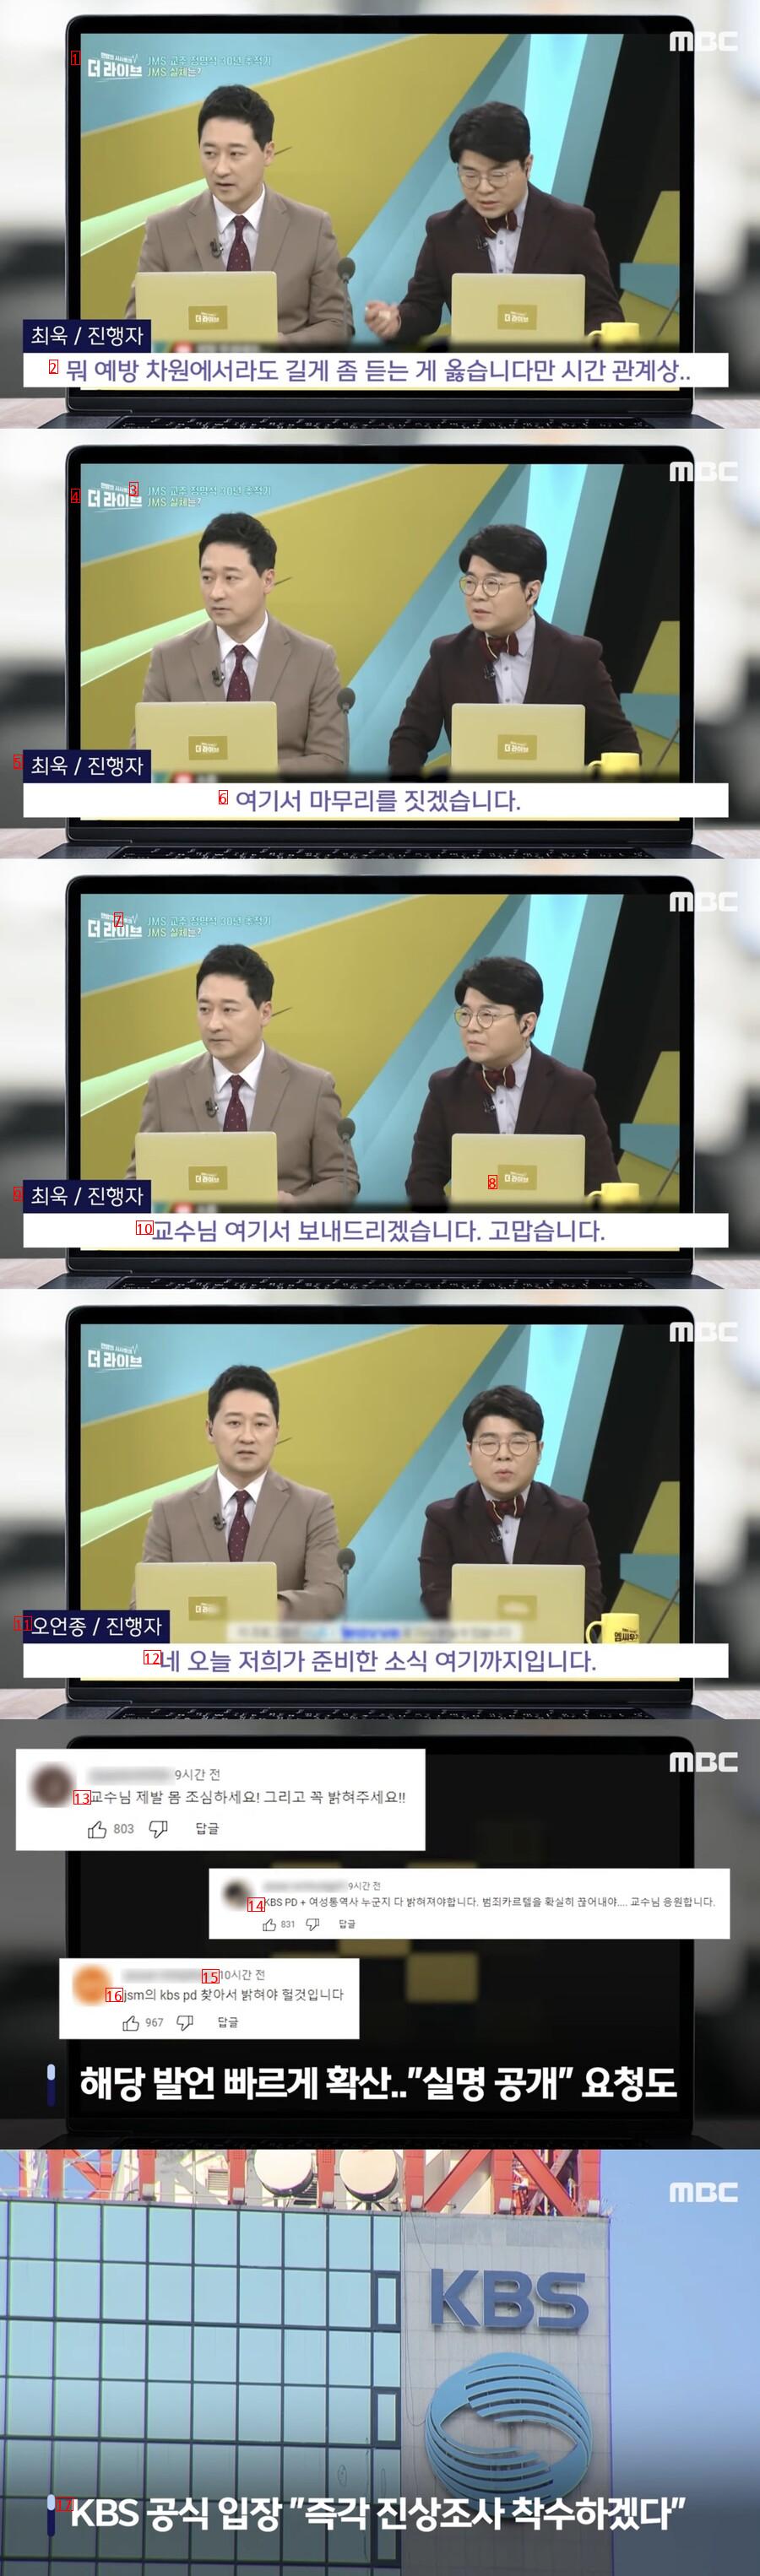 MBC 뉴스에 나온 옆 방송사 JMS 논란 ㄷㄷㄷ..NEWS